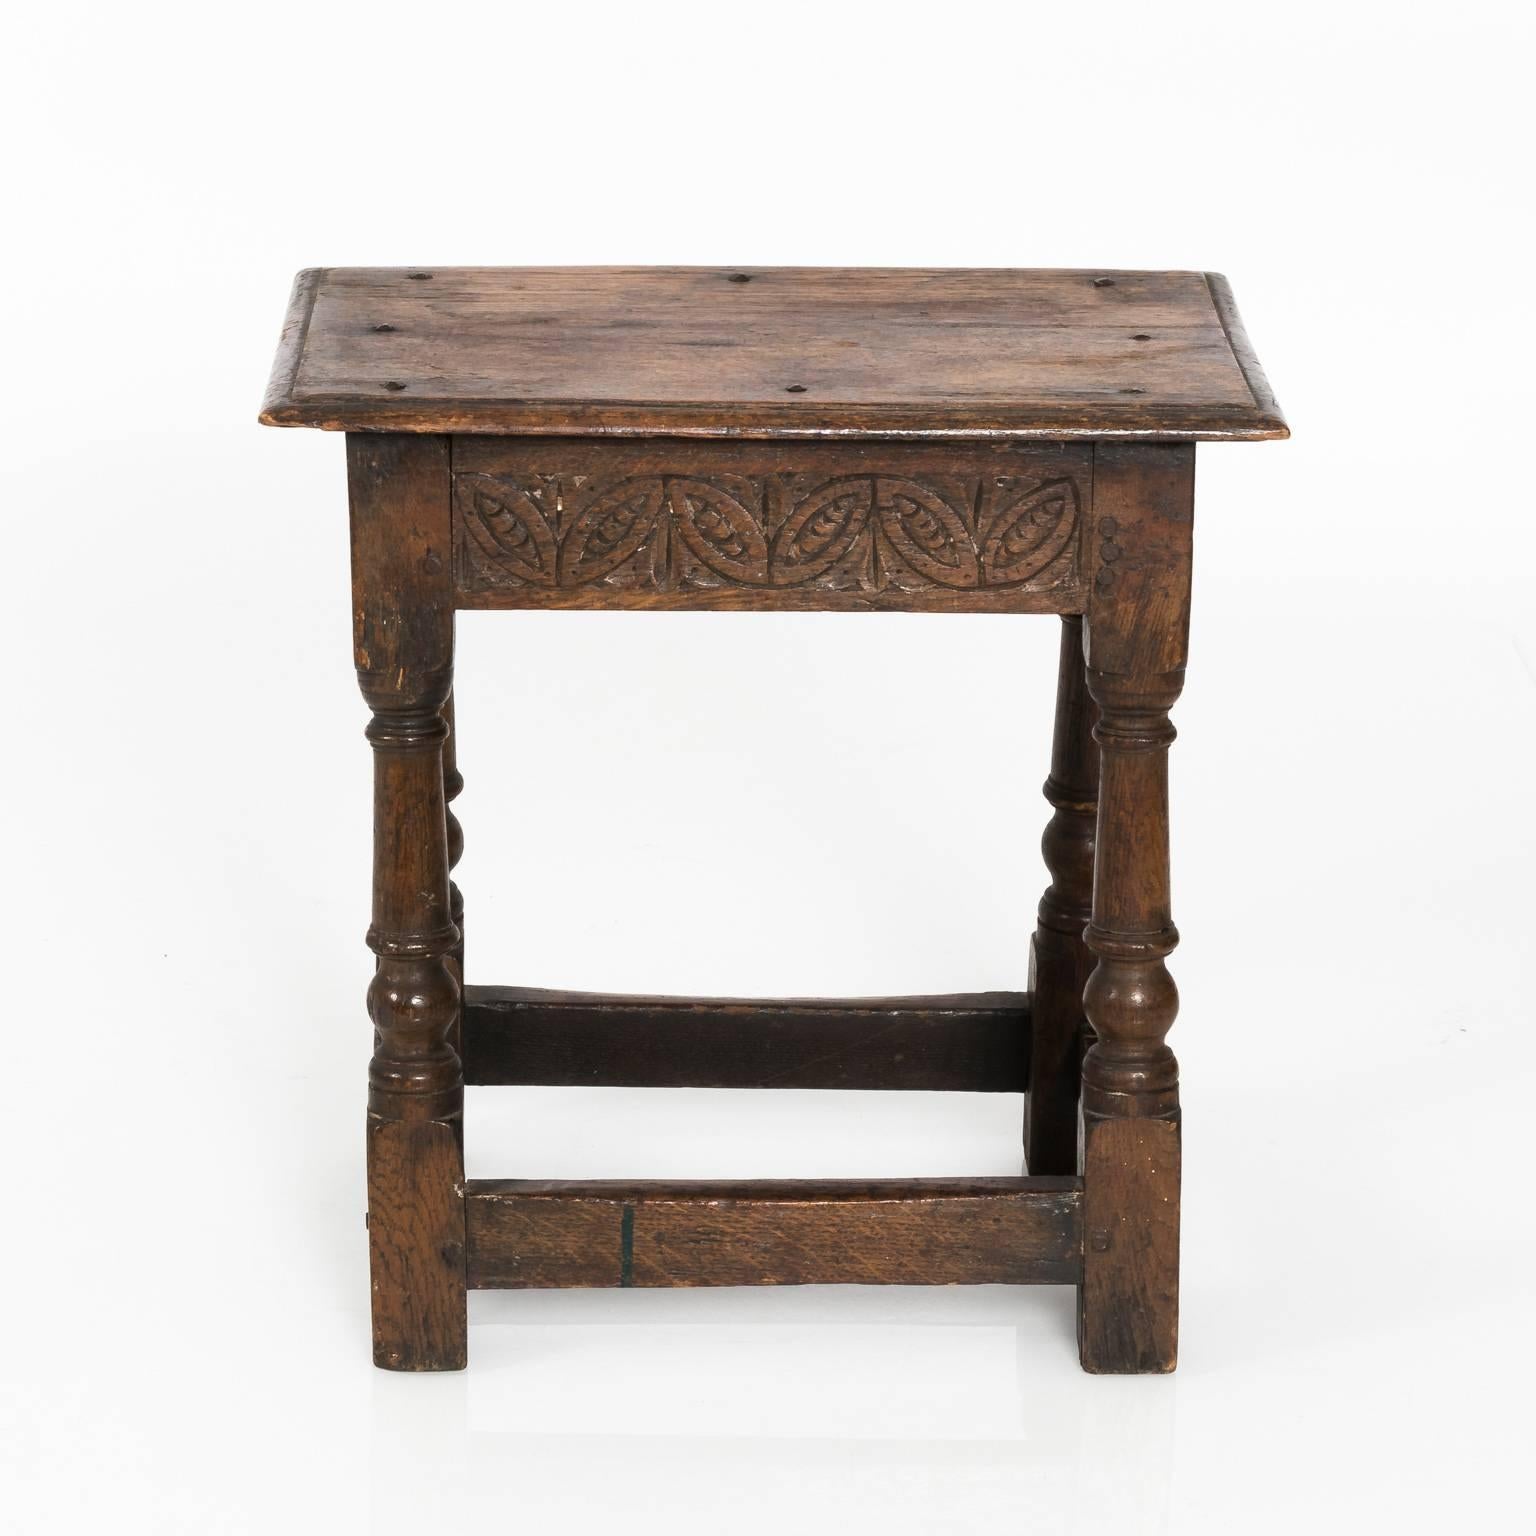 Circa 18th century joint stool of English oak.
